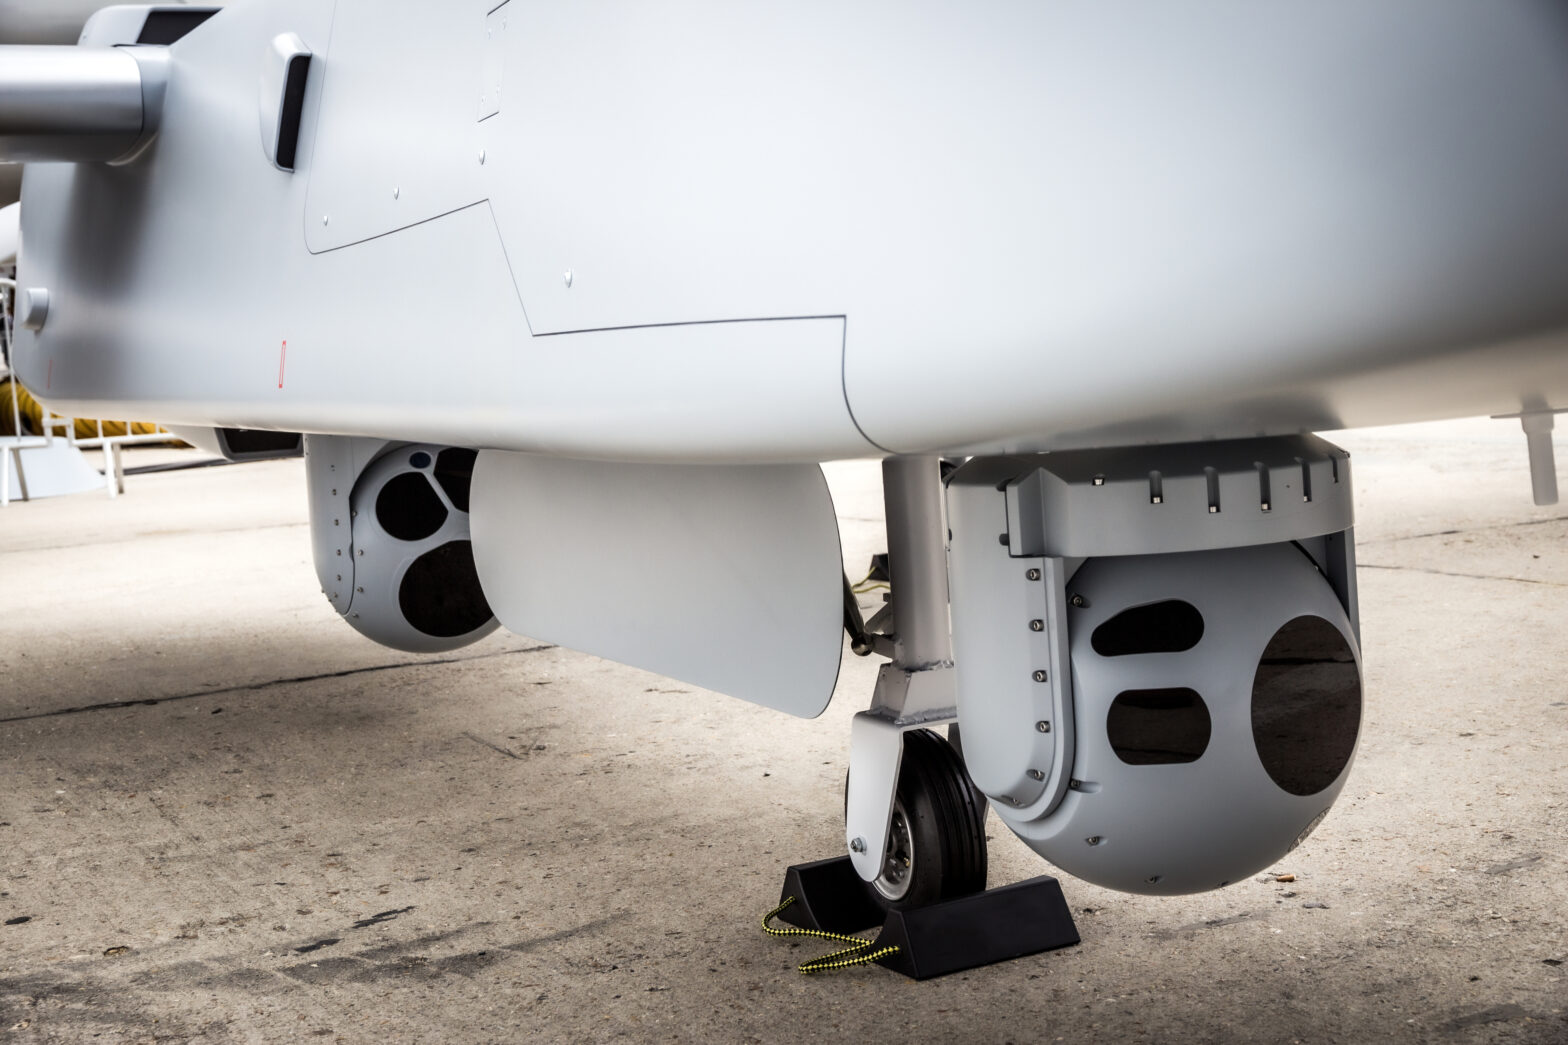 Camera sensor pods under an unmanned aerial surveillance drone aircraft.